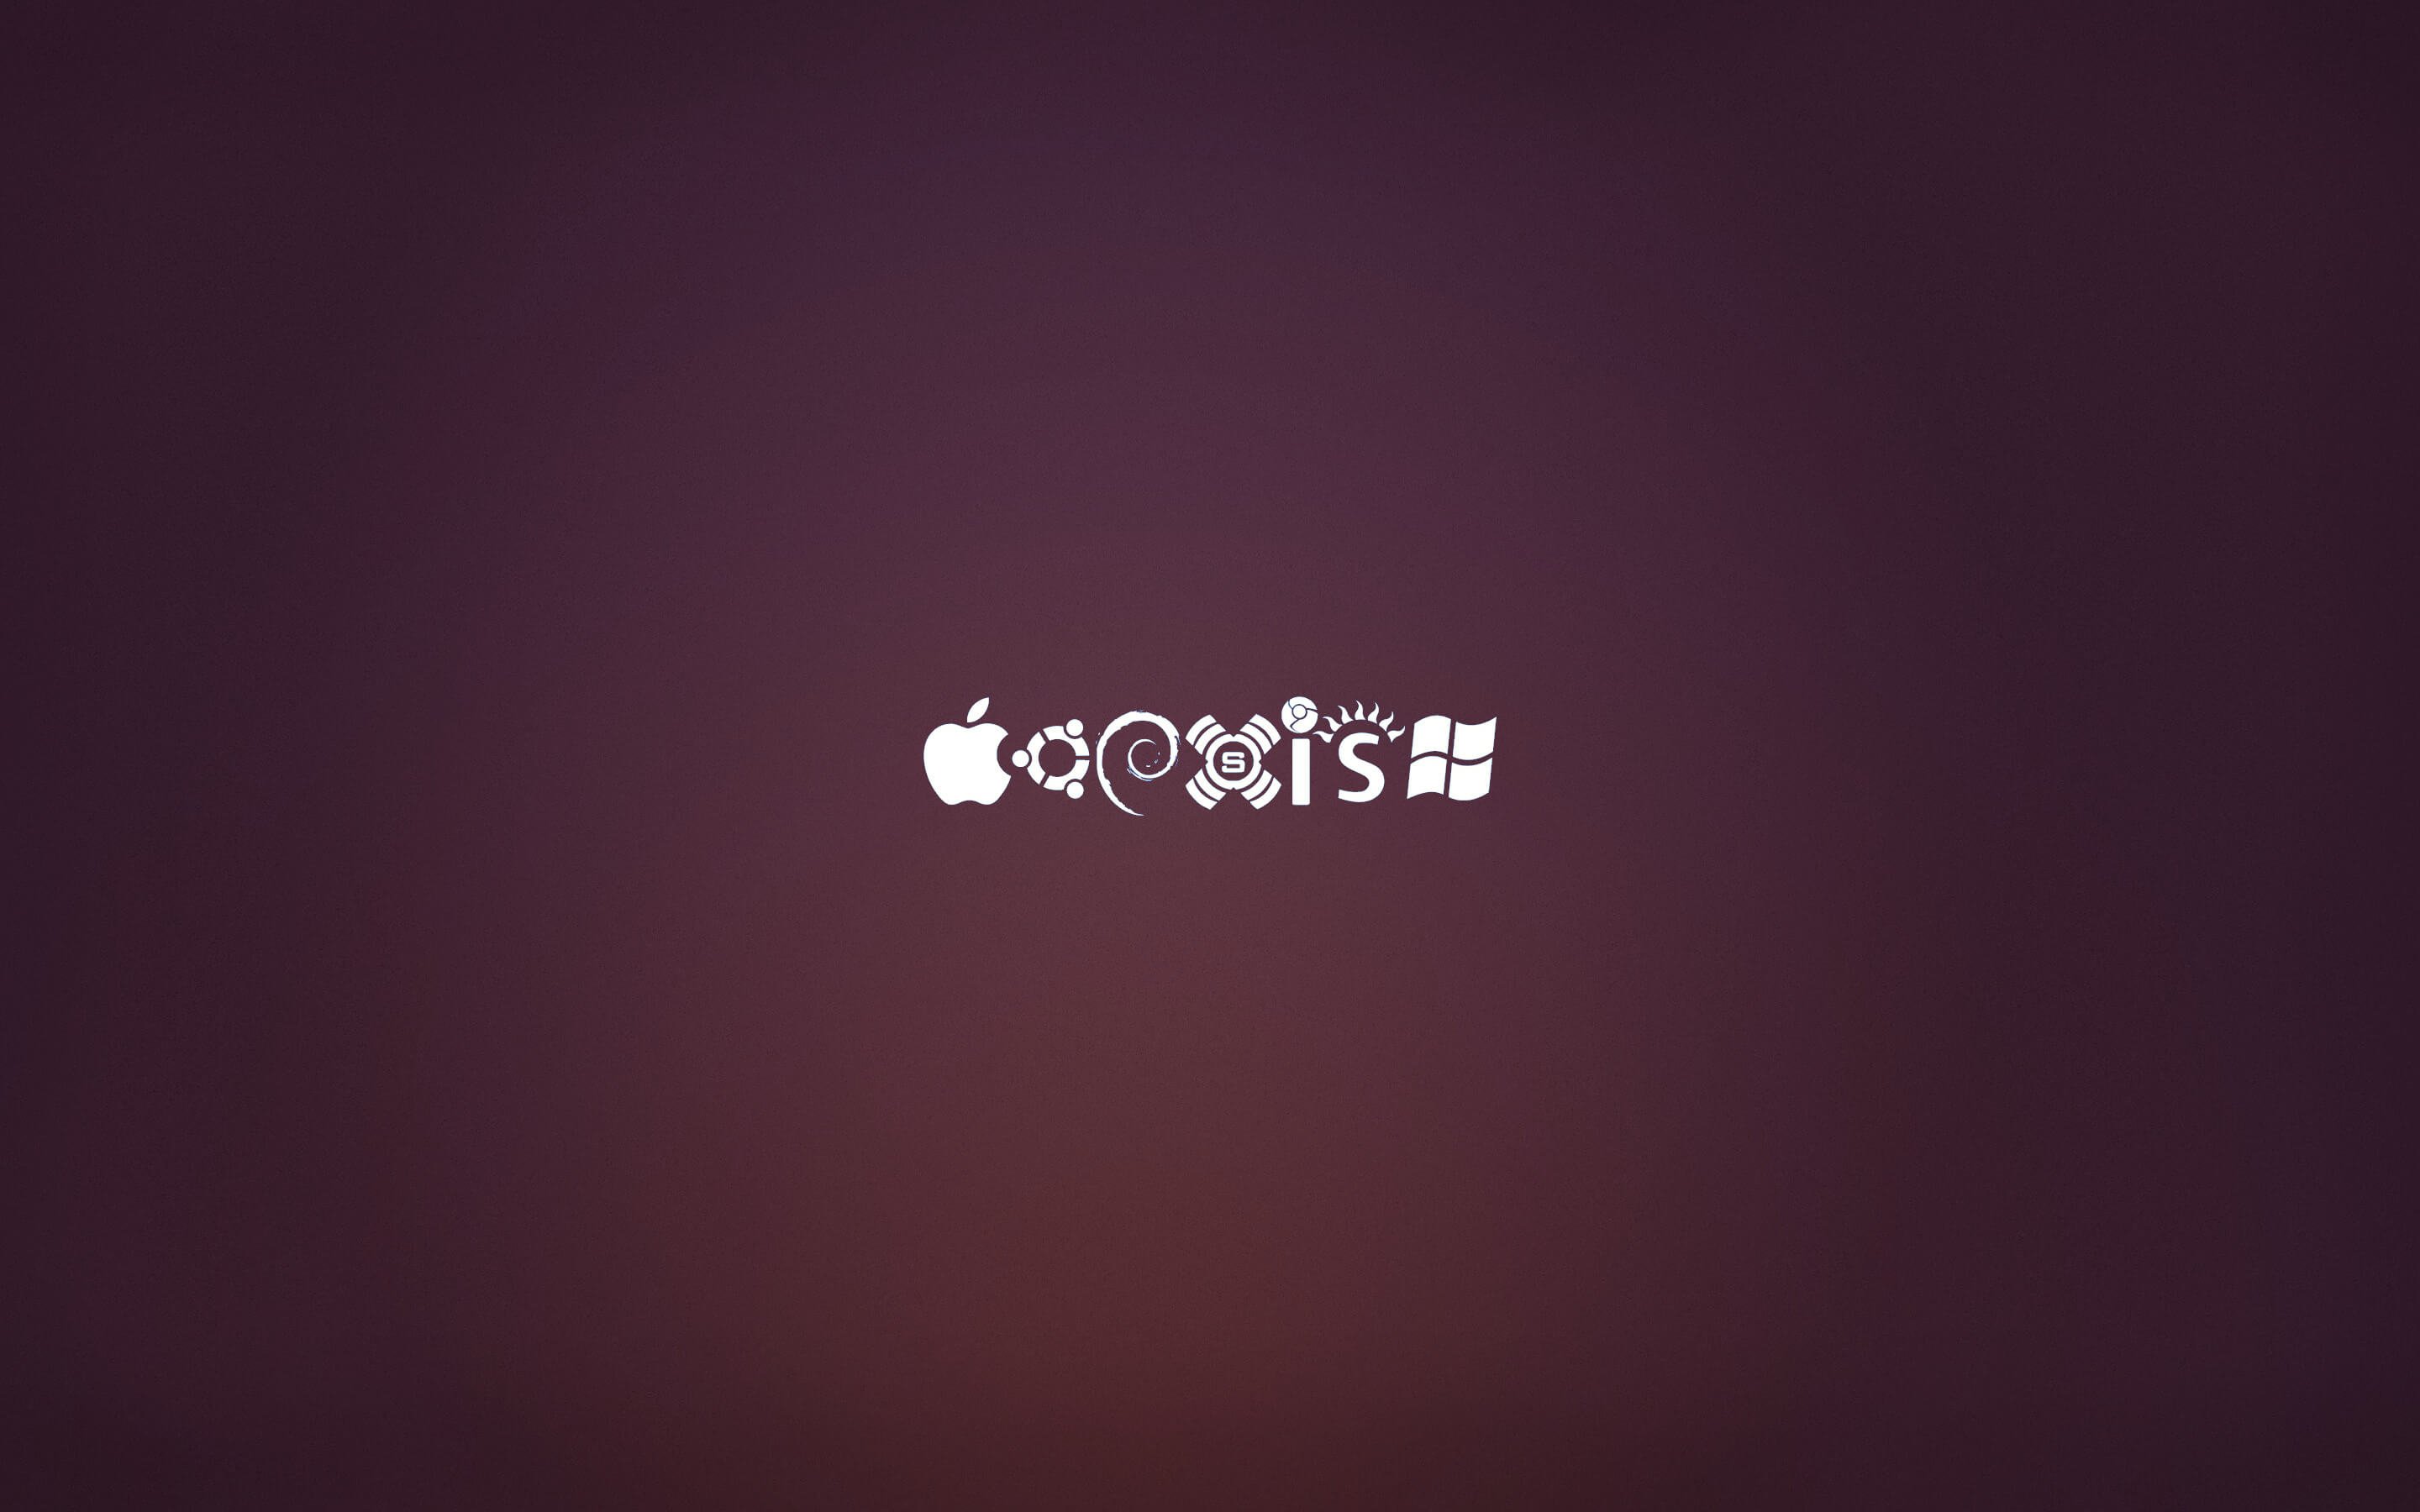 OS Coexist Wallpaper for Desktop 2880x1800